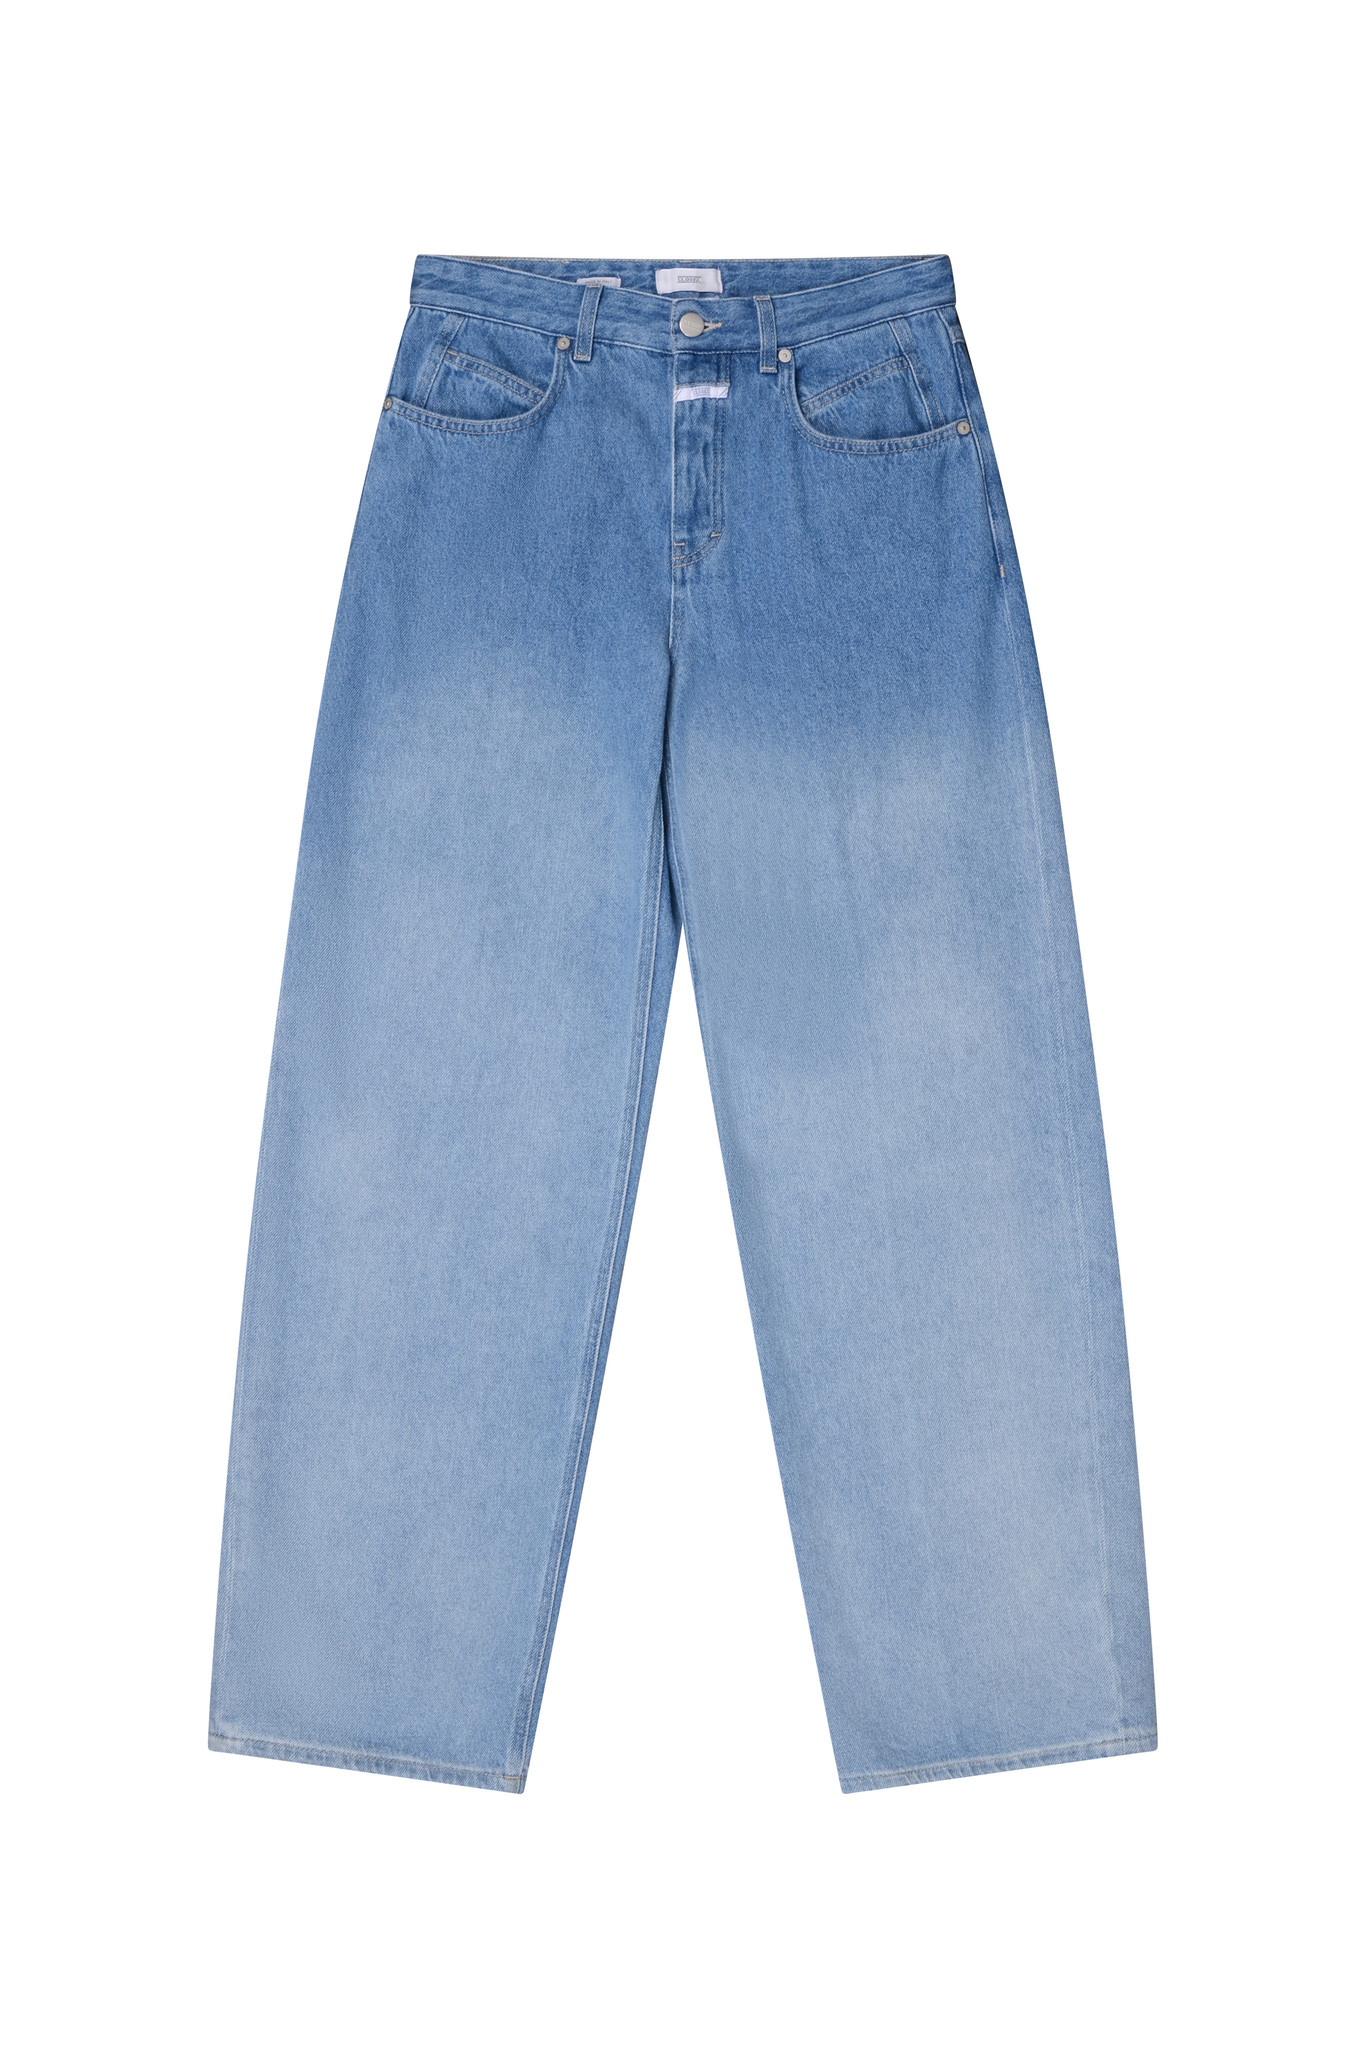 Nikka Jeans in Mid Blue Faded-1